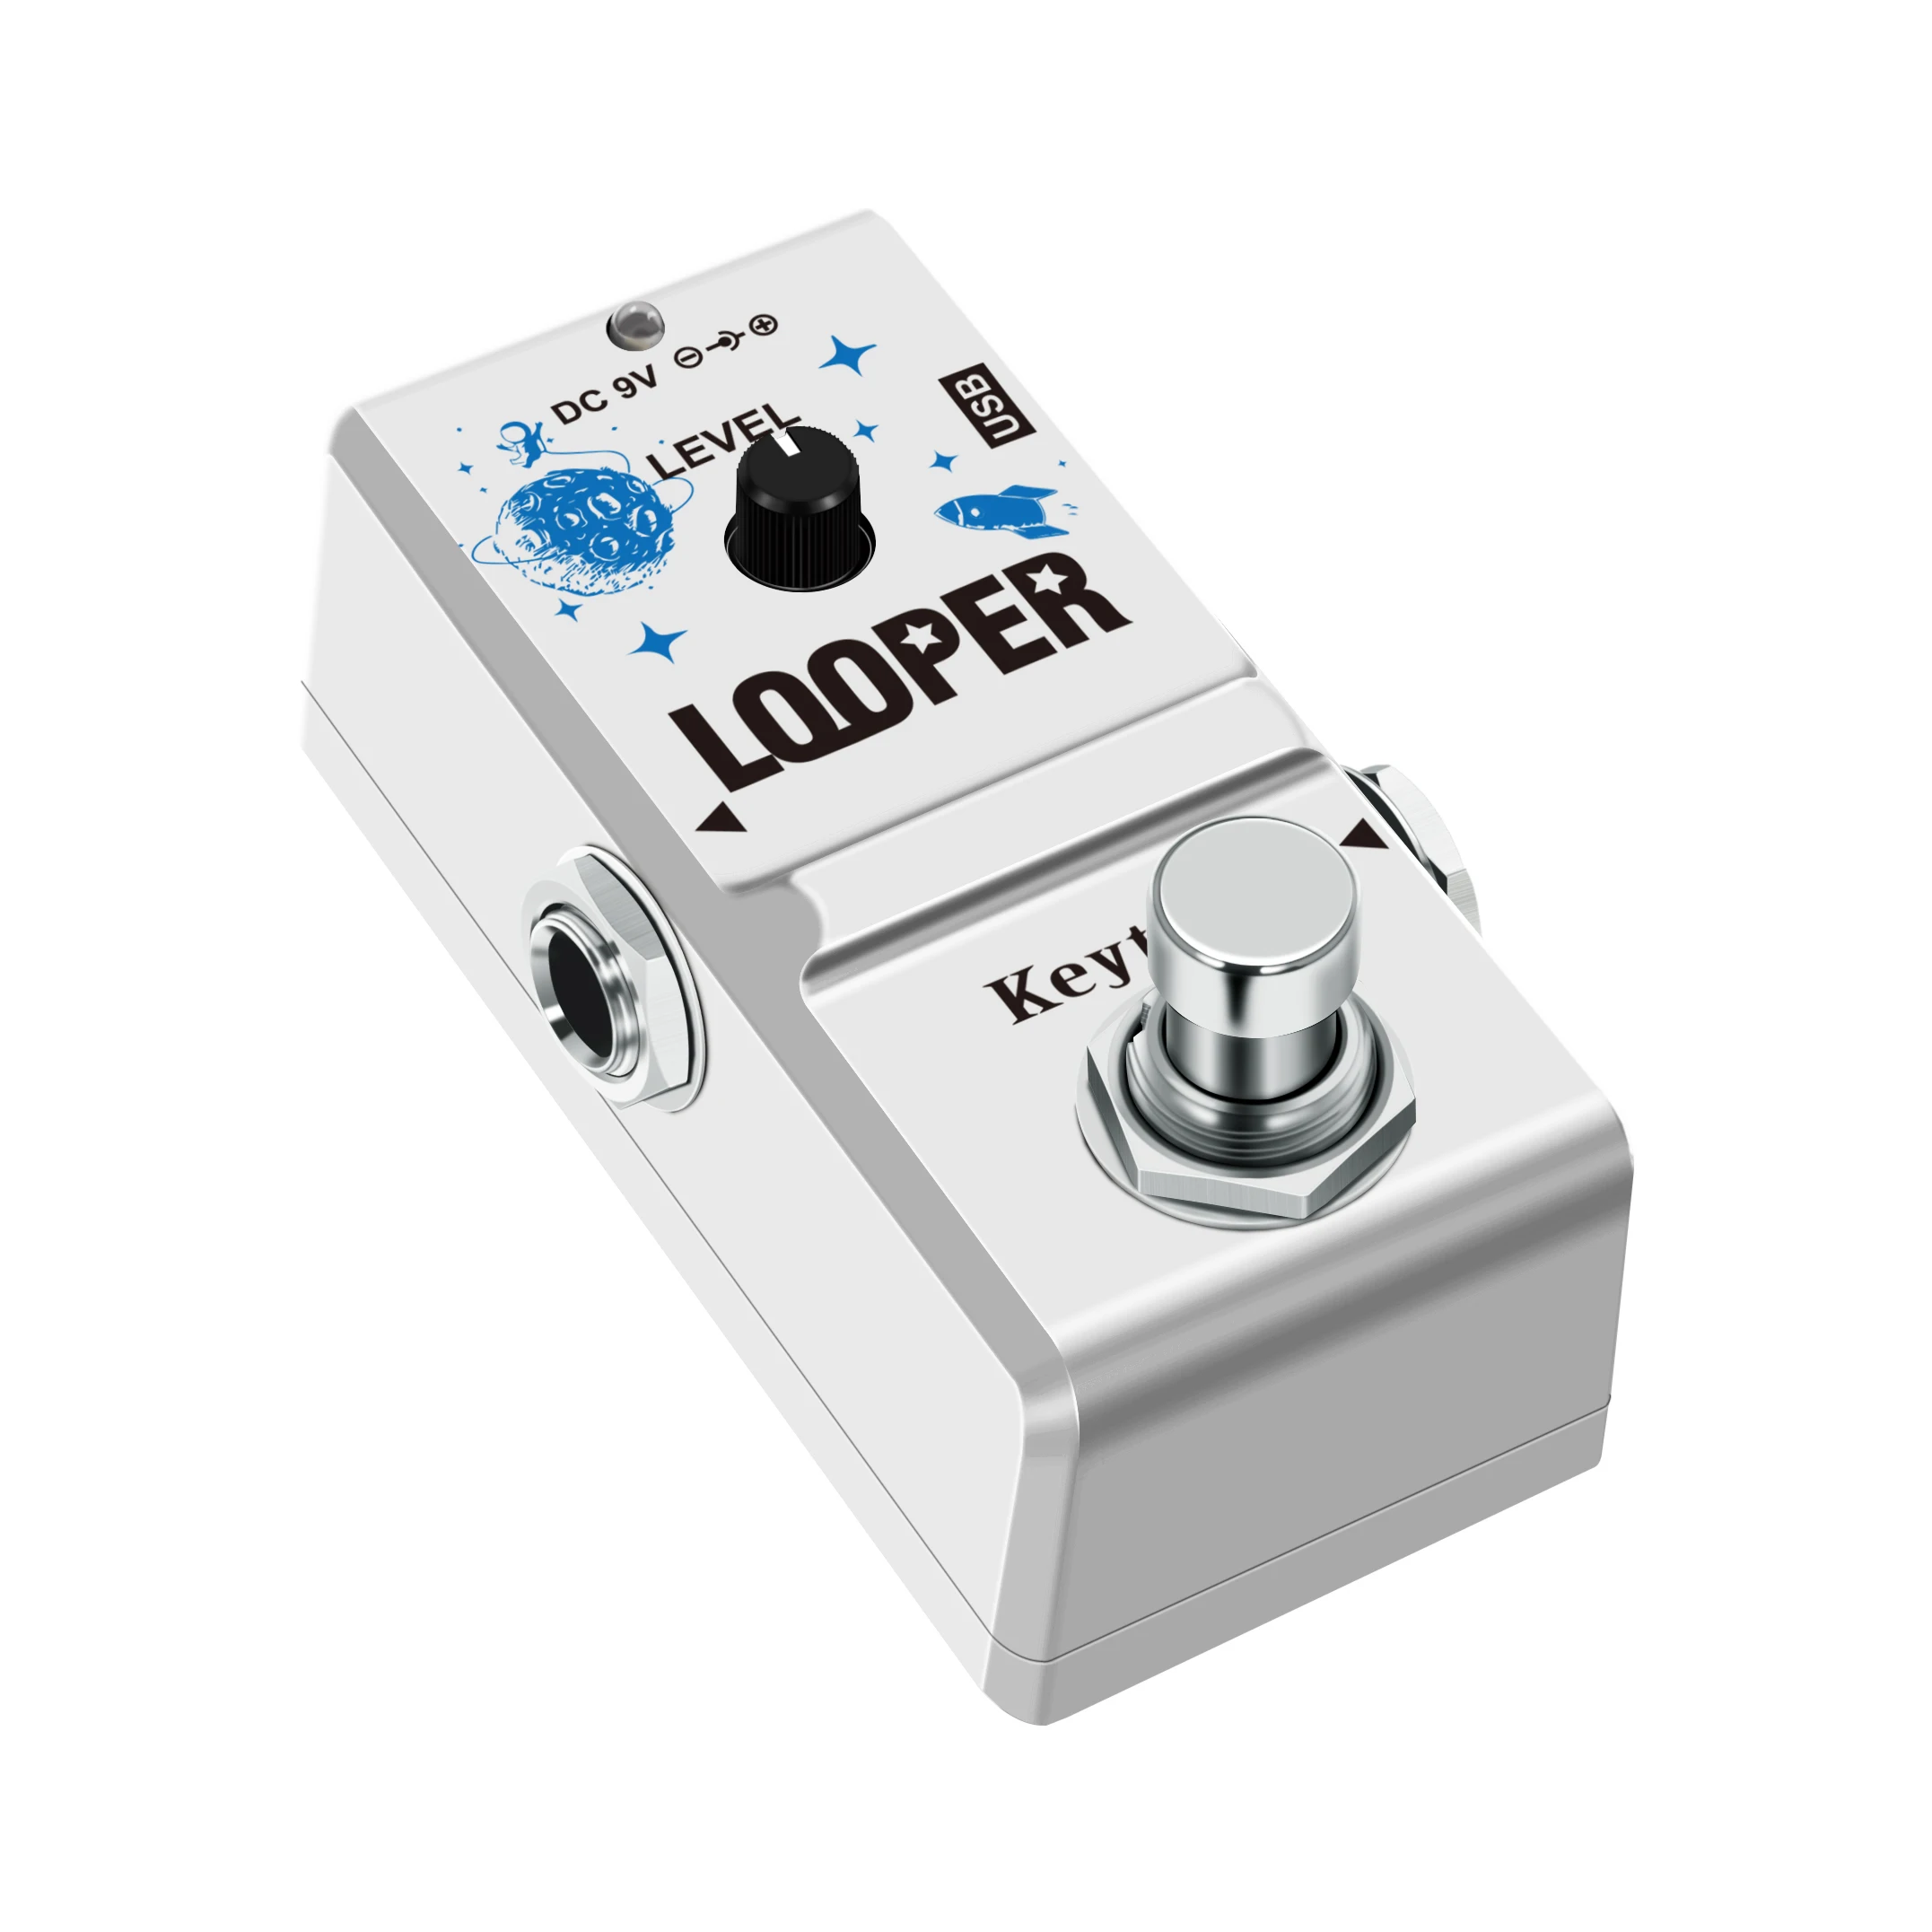 Keytars LN-332 48K Looper Electric Guitar Effect Loop Pedal 10 Minutes of Looping Unlimited Overdubs USB Port True Bypass enlarge